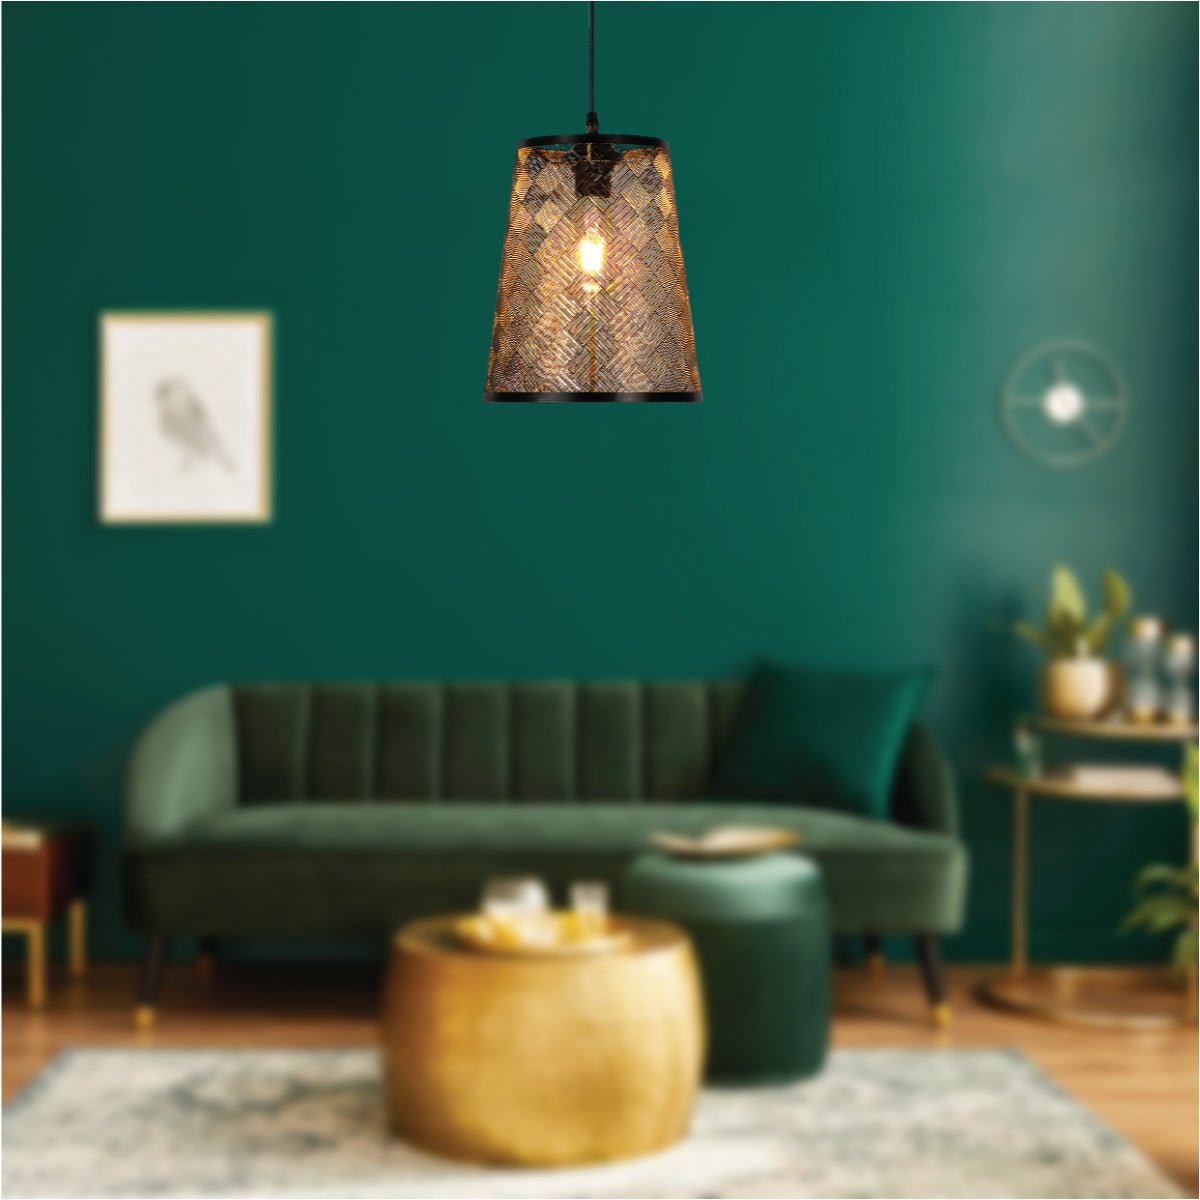 Indoor usage of Black-Golden Metal Frustum Pendant Ceiling Light with E27 | TEKLED 150-17986